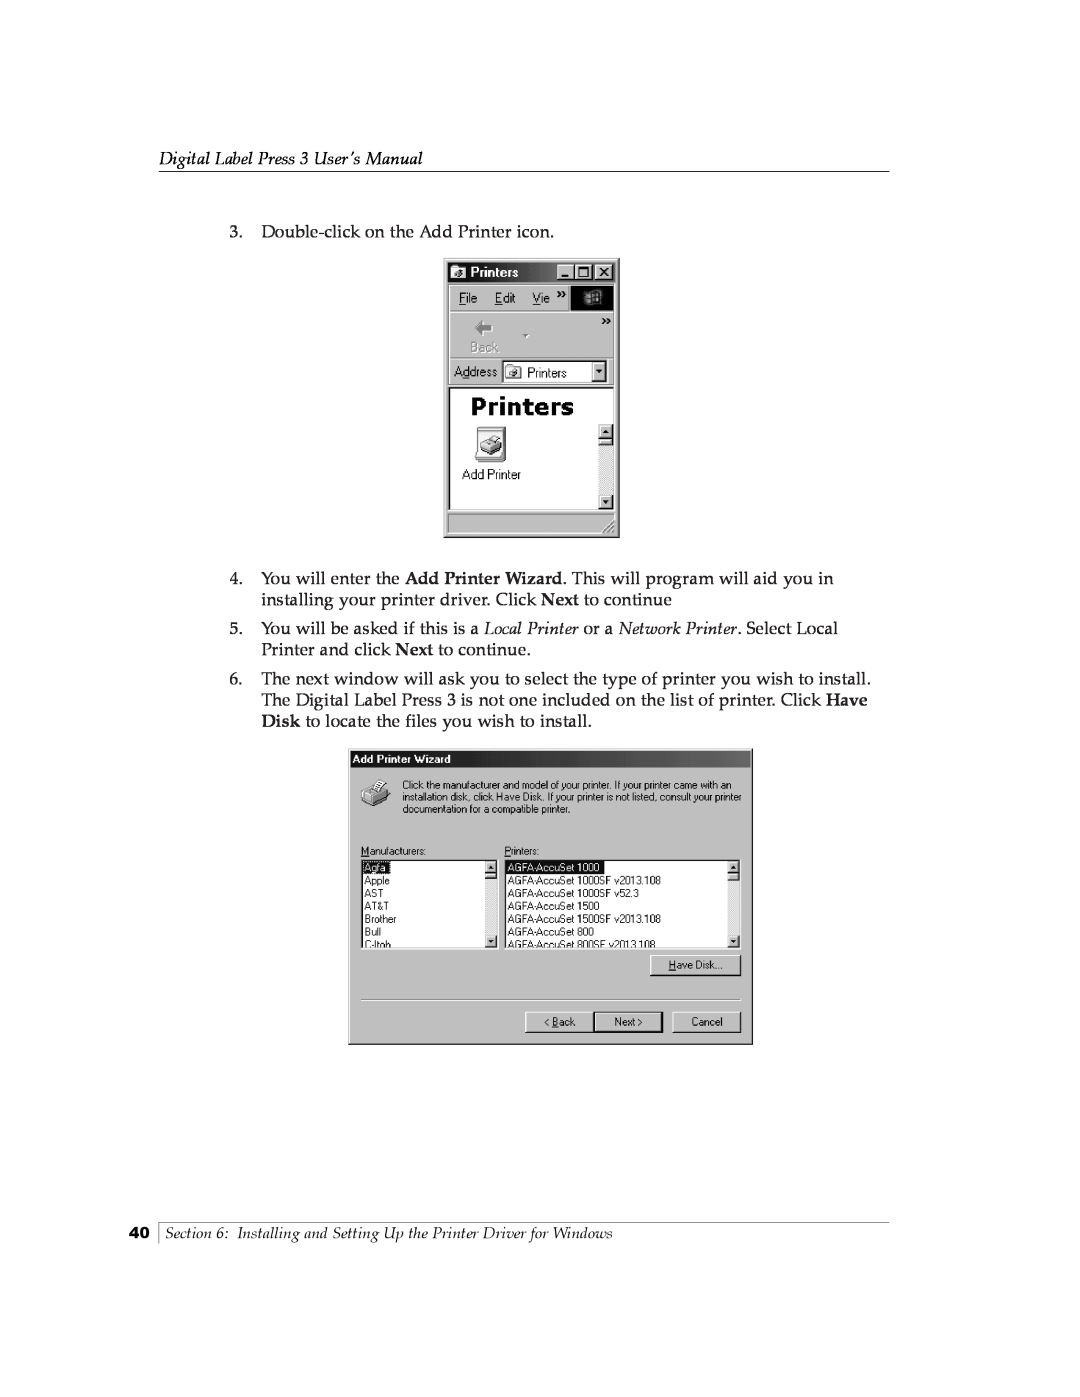 Primera Technology 510212 manual Digital Label Press 3 User’s Manual, Double-click on the Add Printer icon 